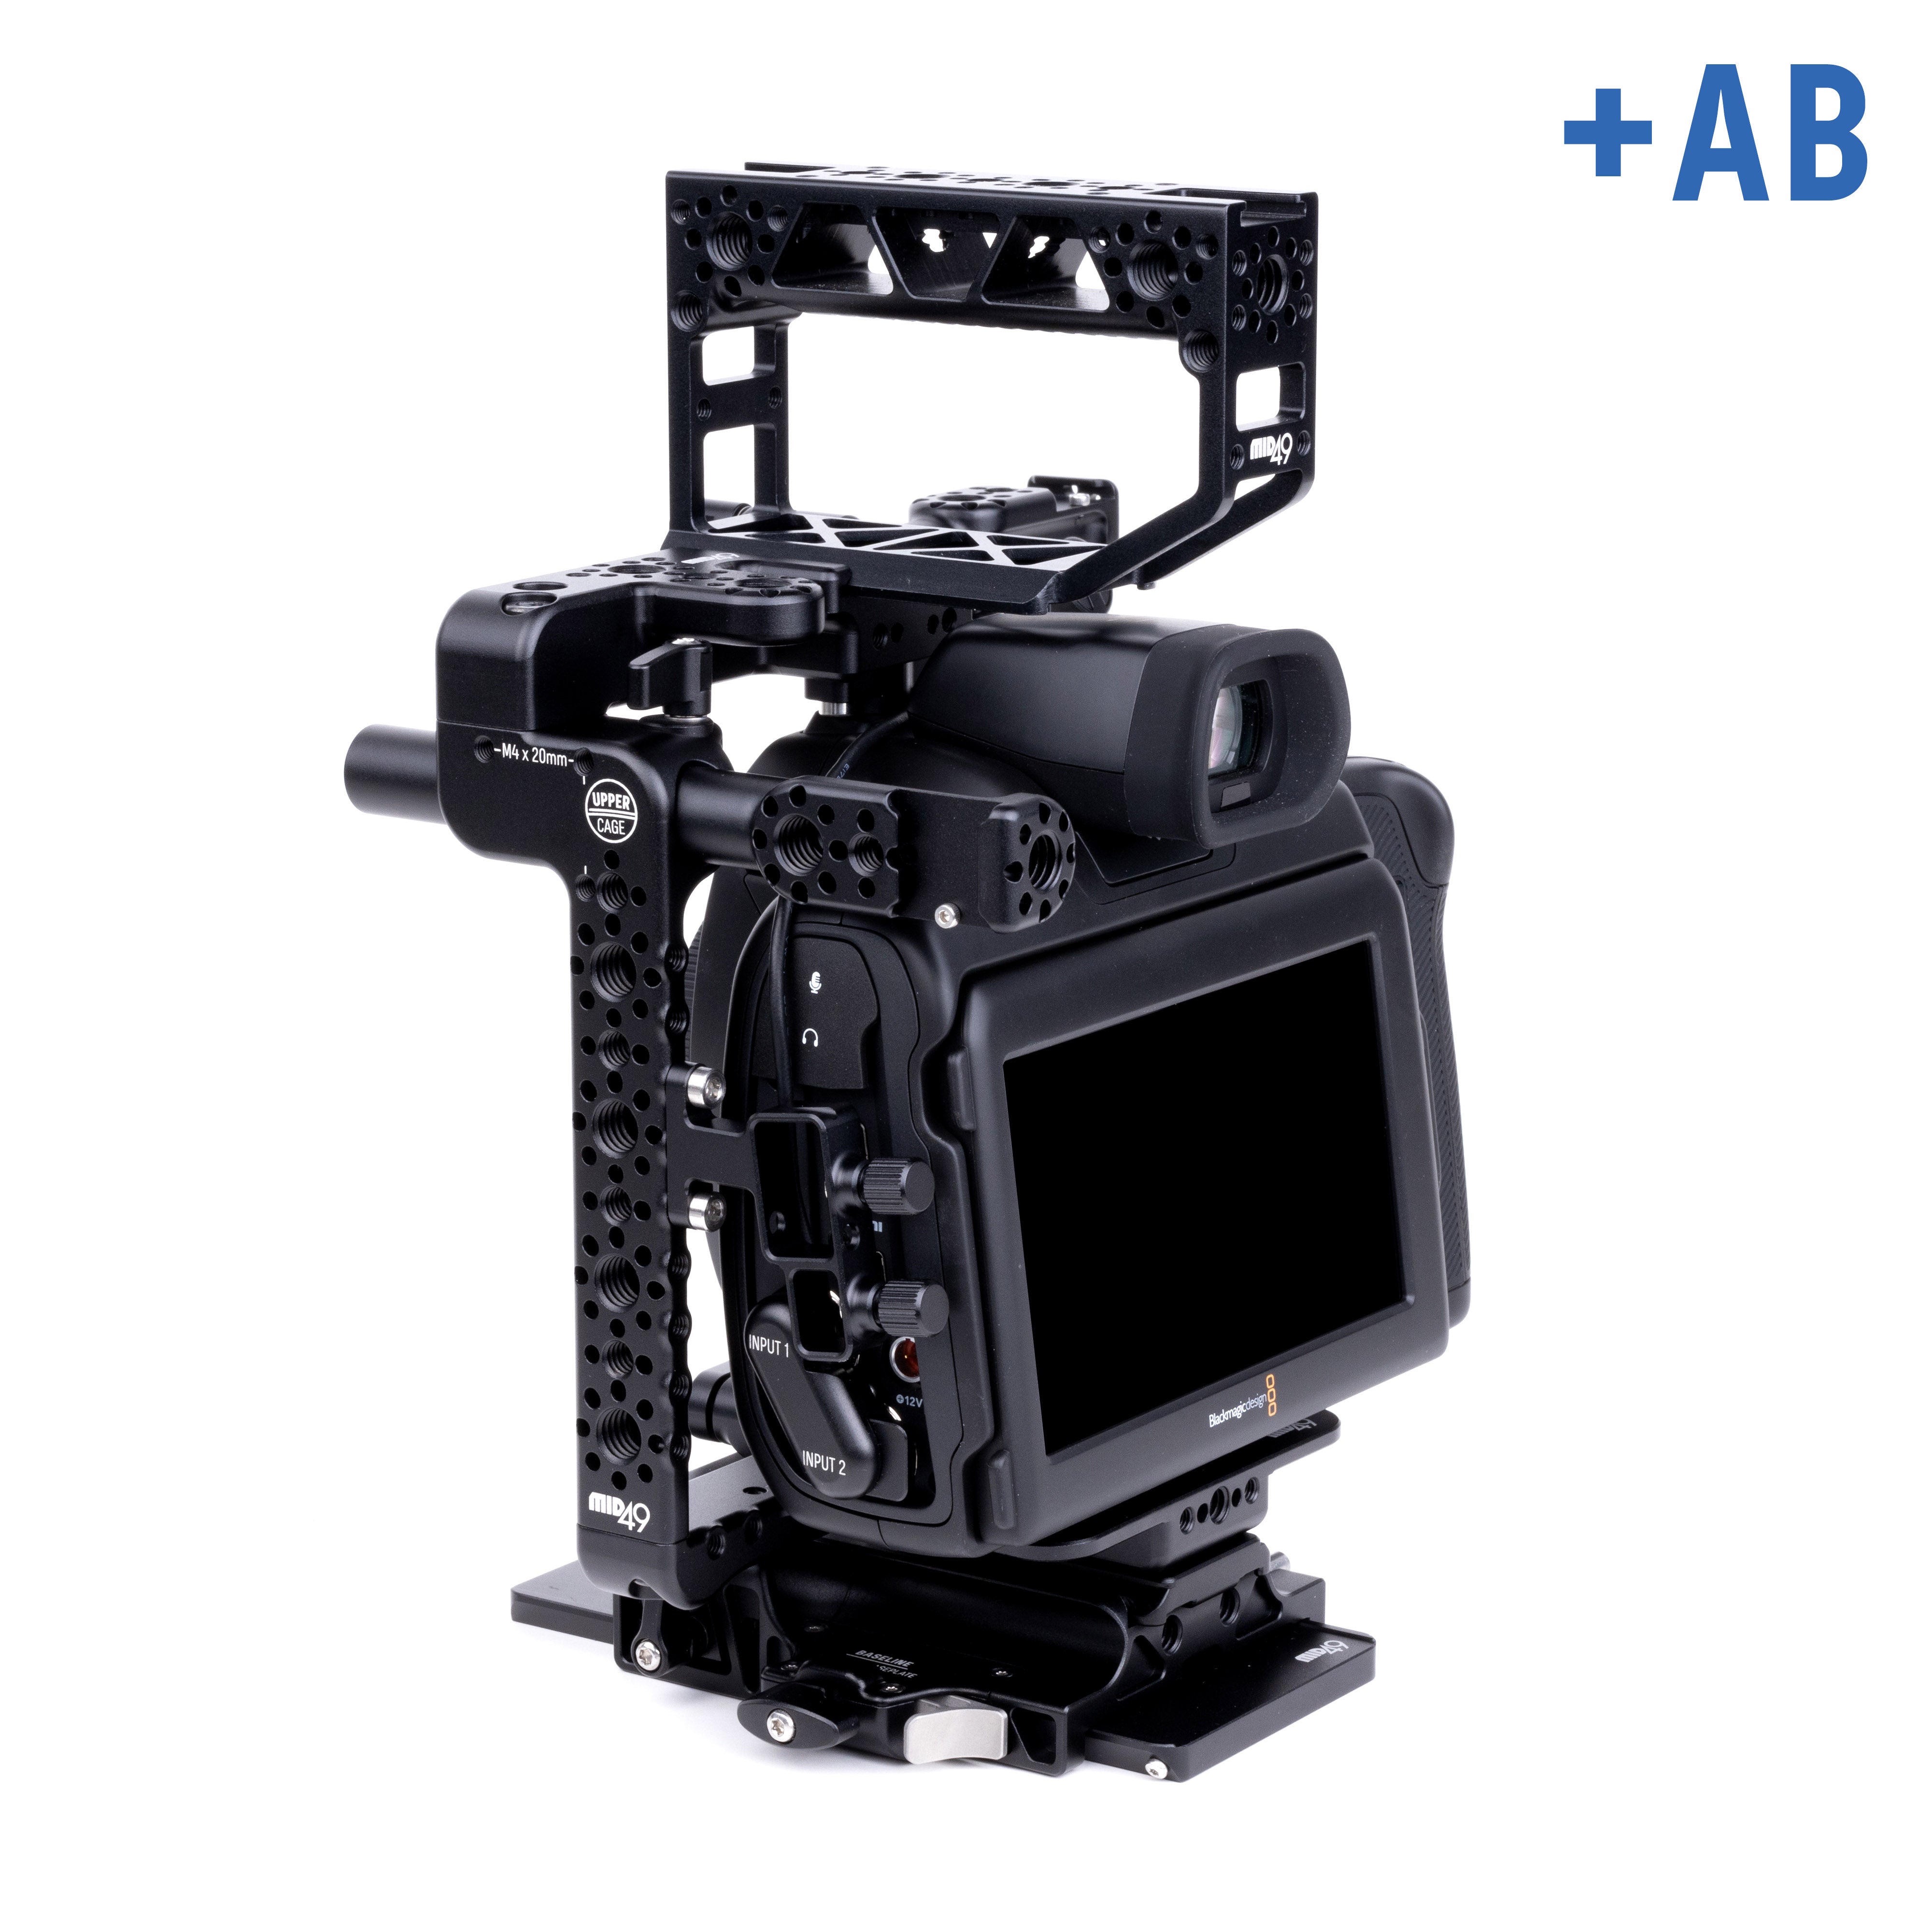 Base Kit for Blackmagic Cinema Camera 6K (Full Frame, Pocket Pro, Pocket G2)